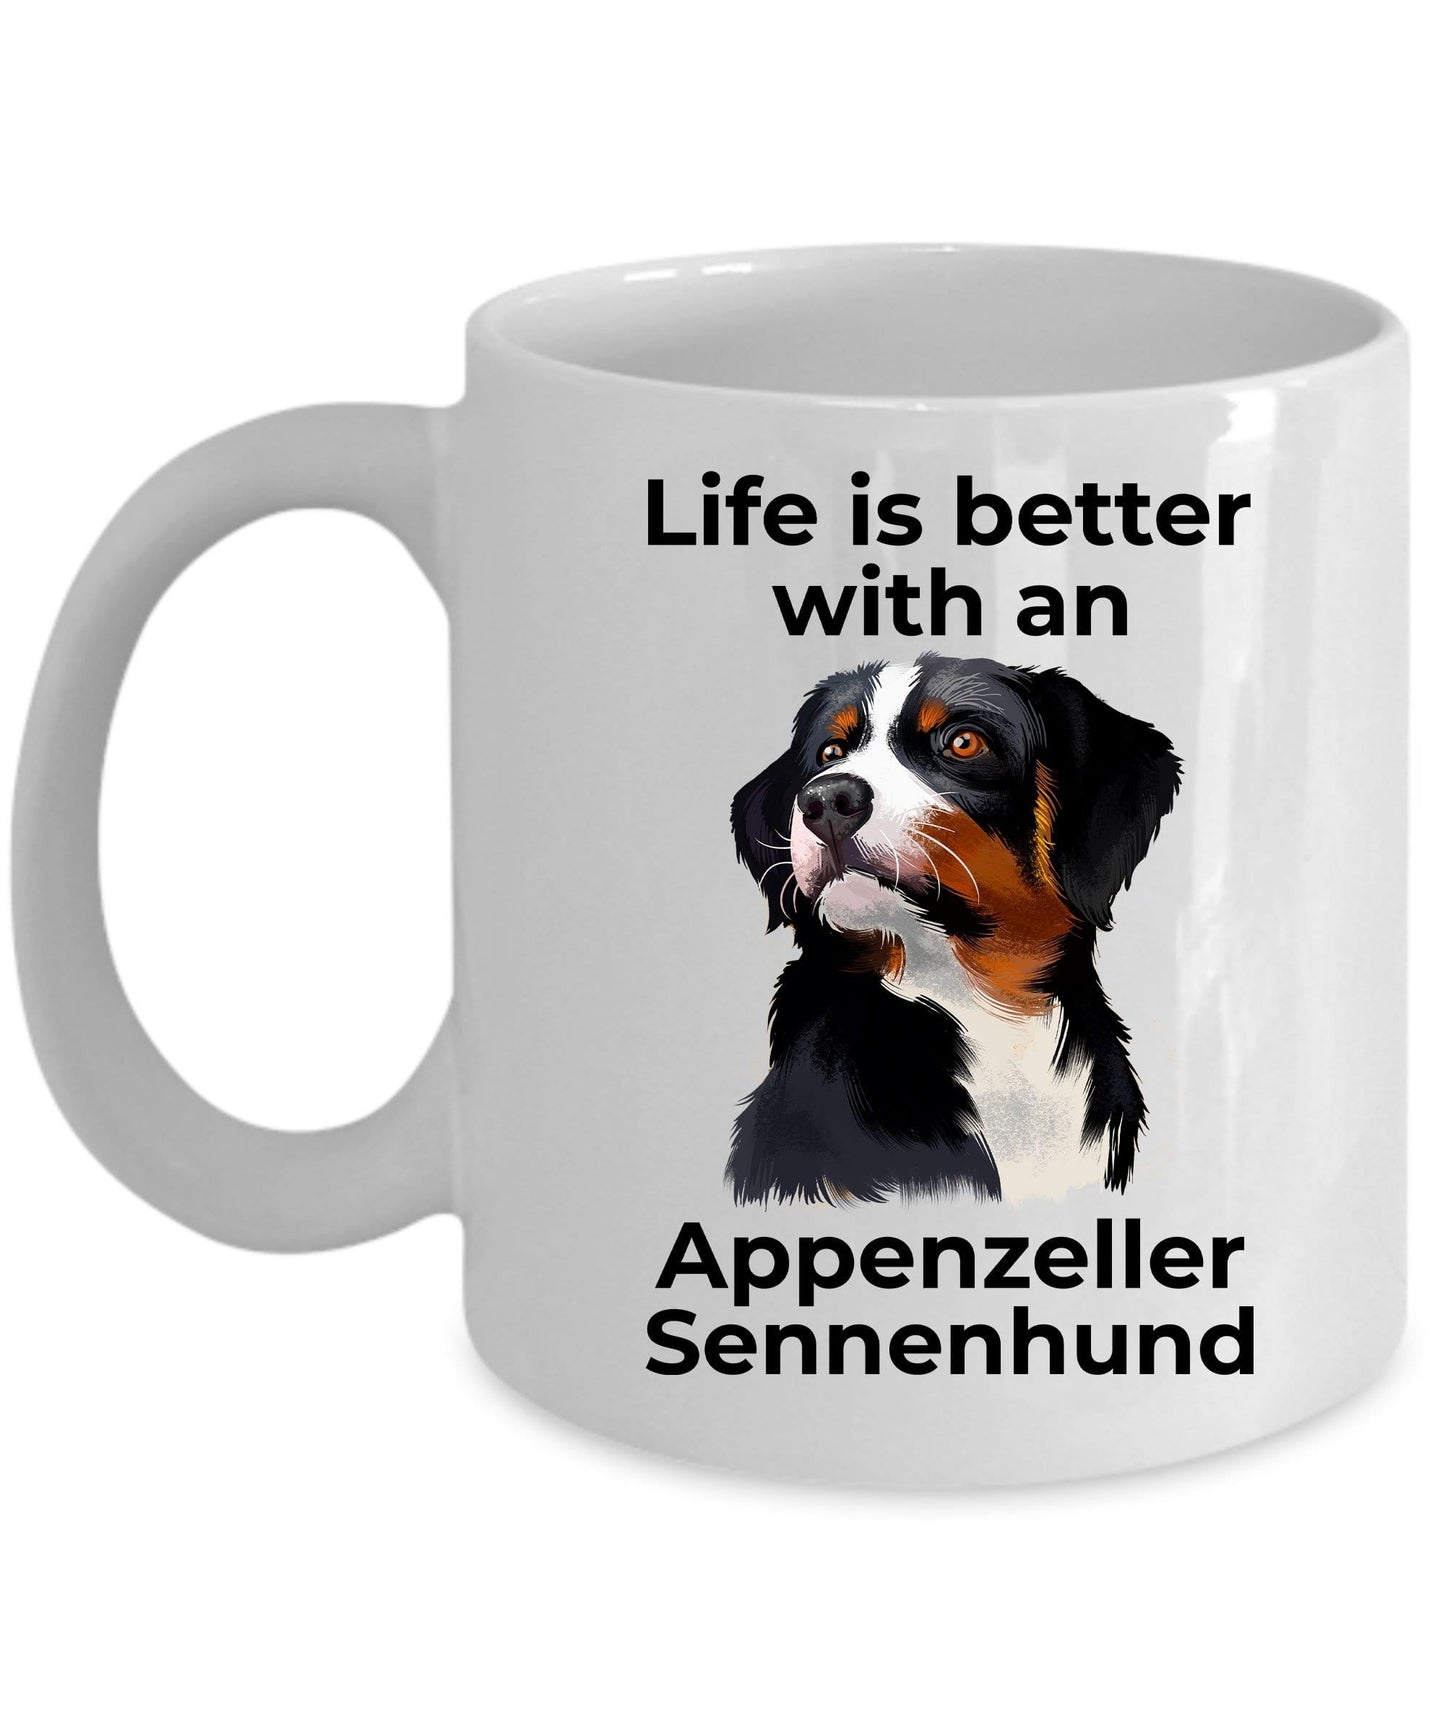 Appenzeller Sennenhund Dog Coffee Mug - Life is Better